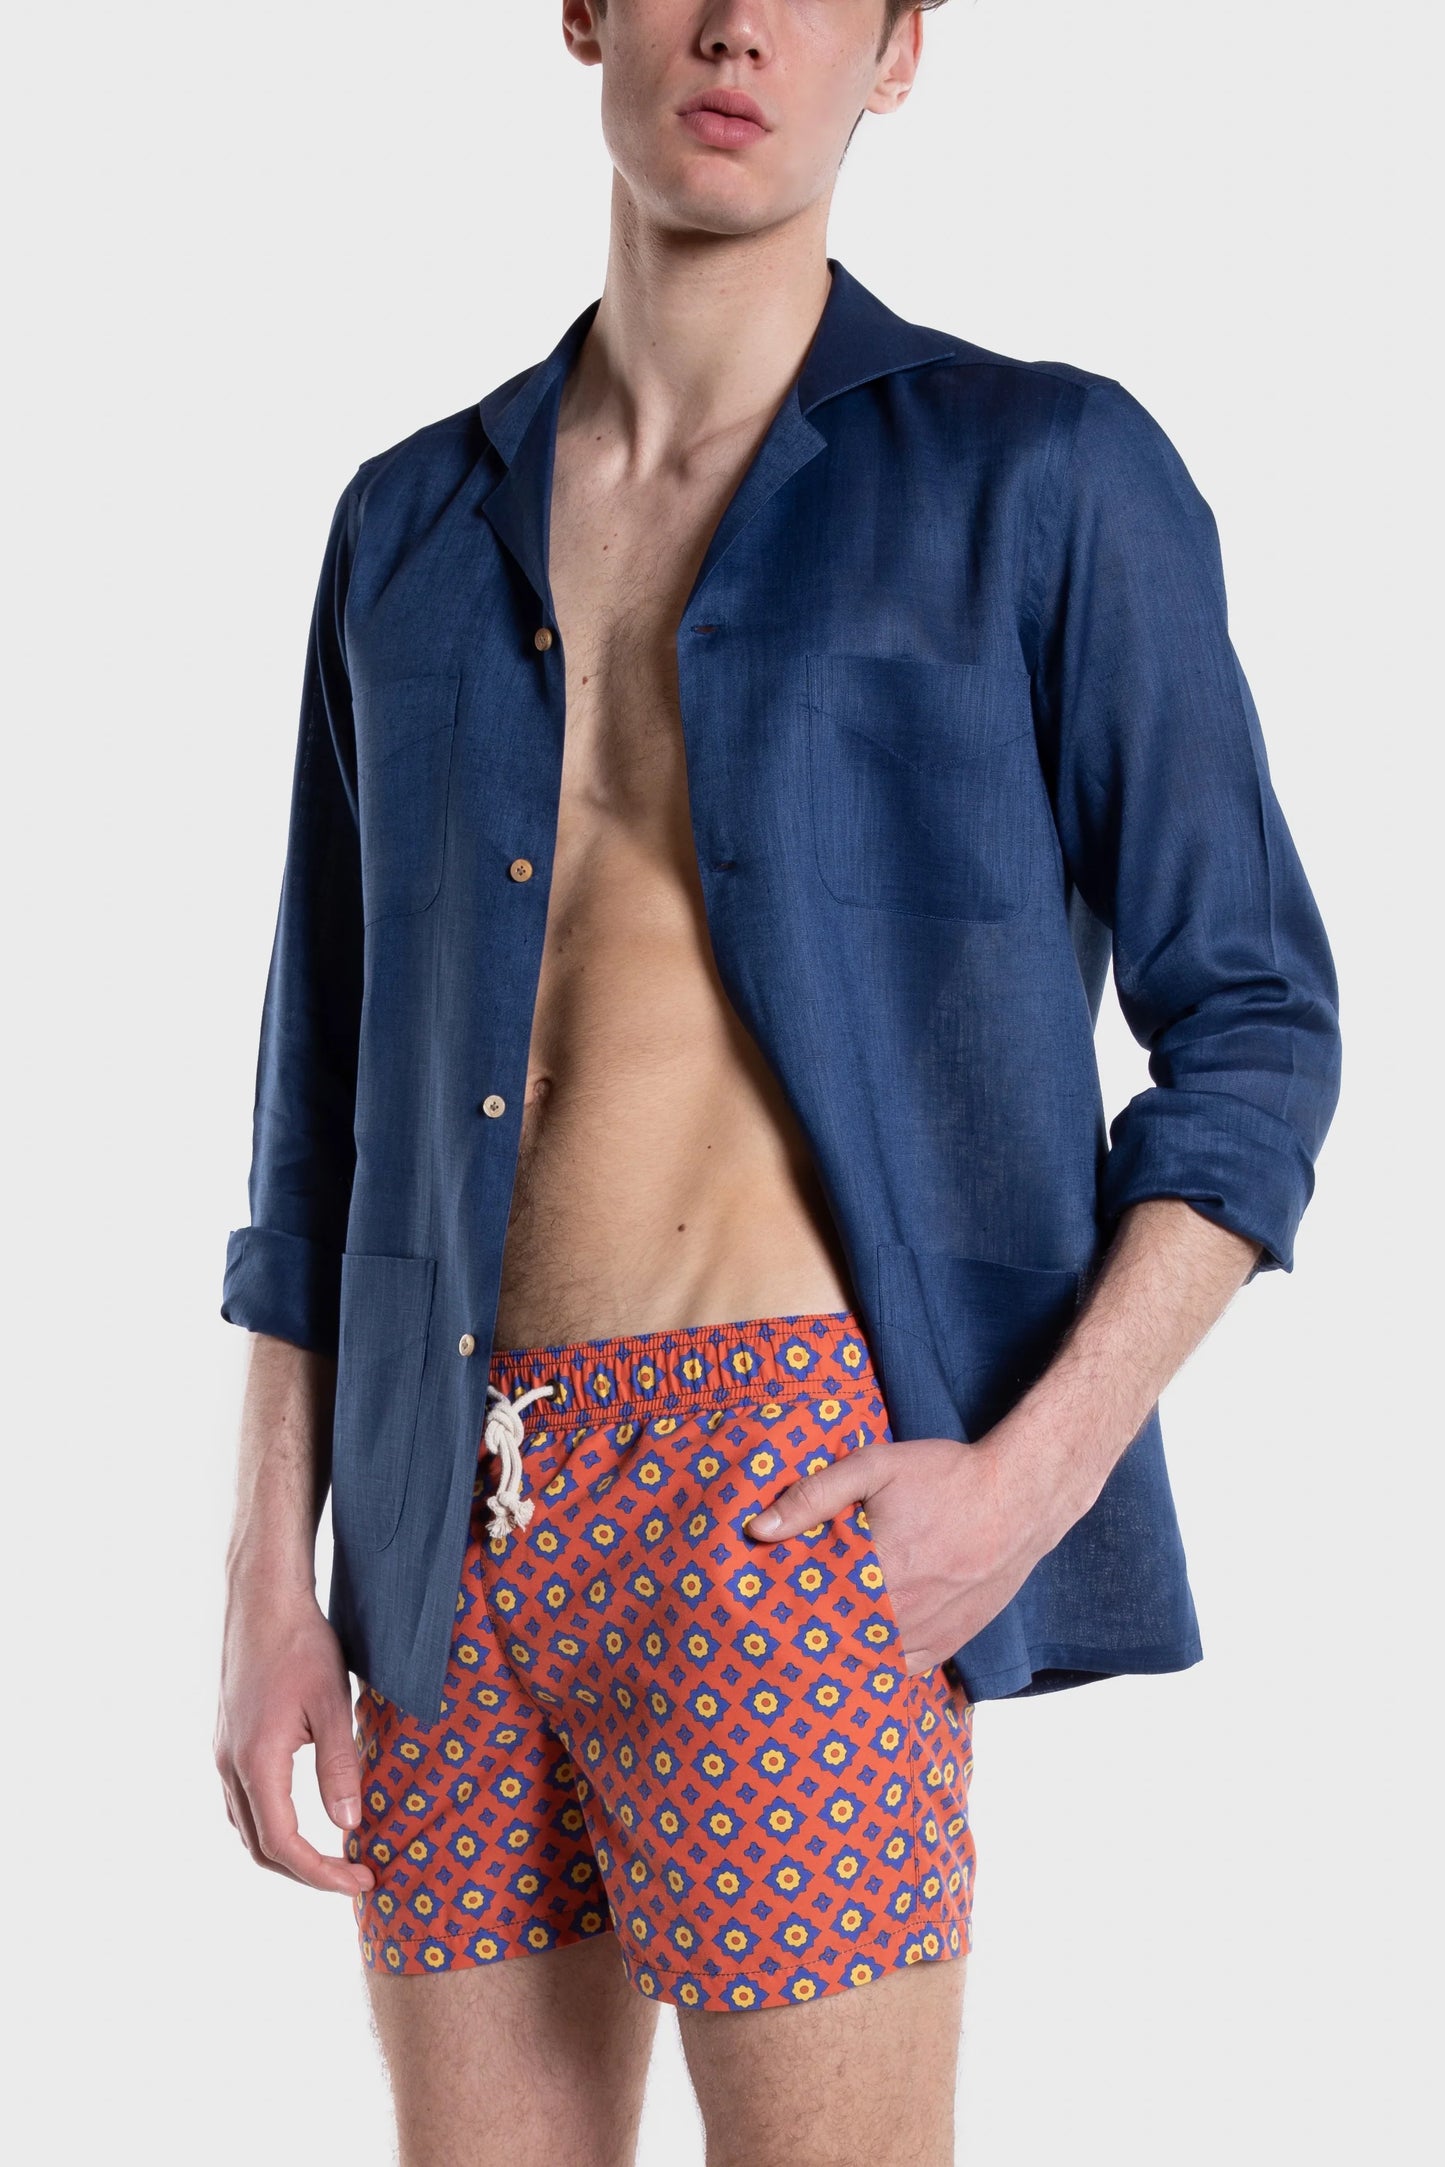 Model wears Ripa Ripa Ischia Linen Shirt - Blu Notte with swim trunks